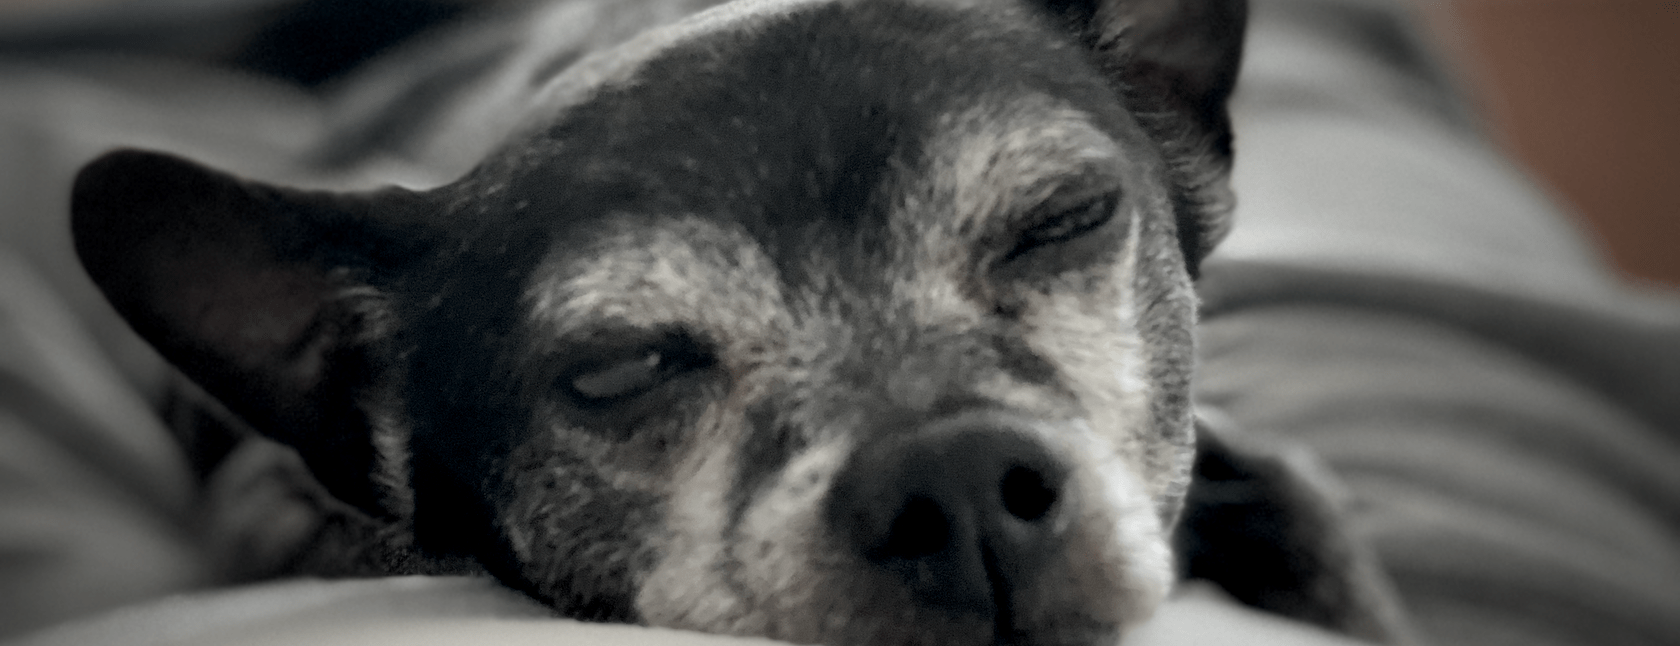 A sleepy chihuahua, eyes closing